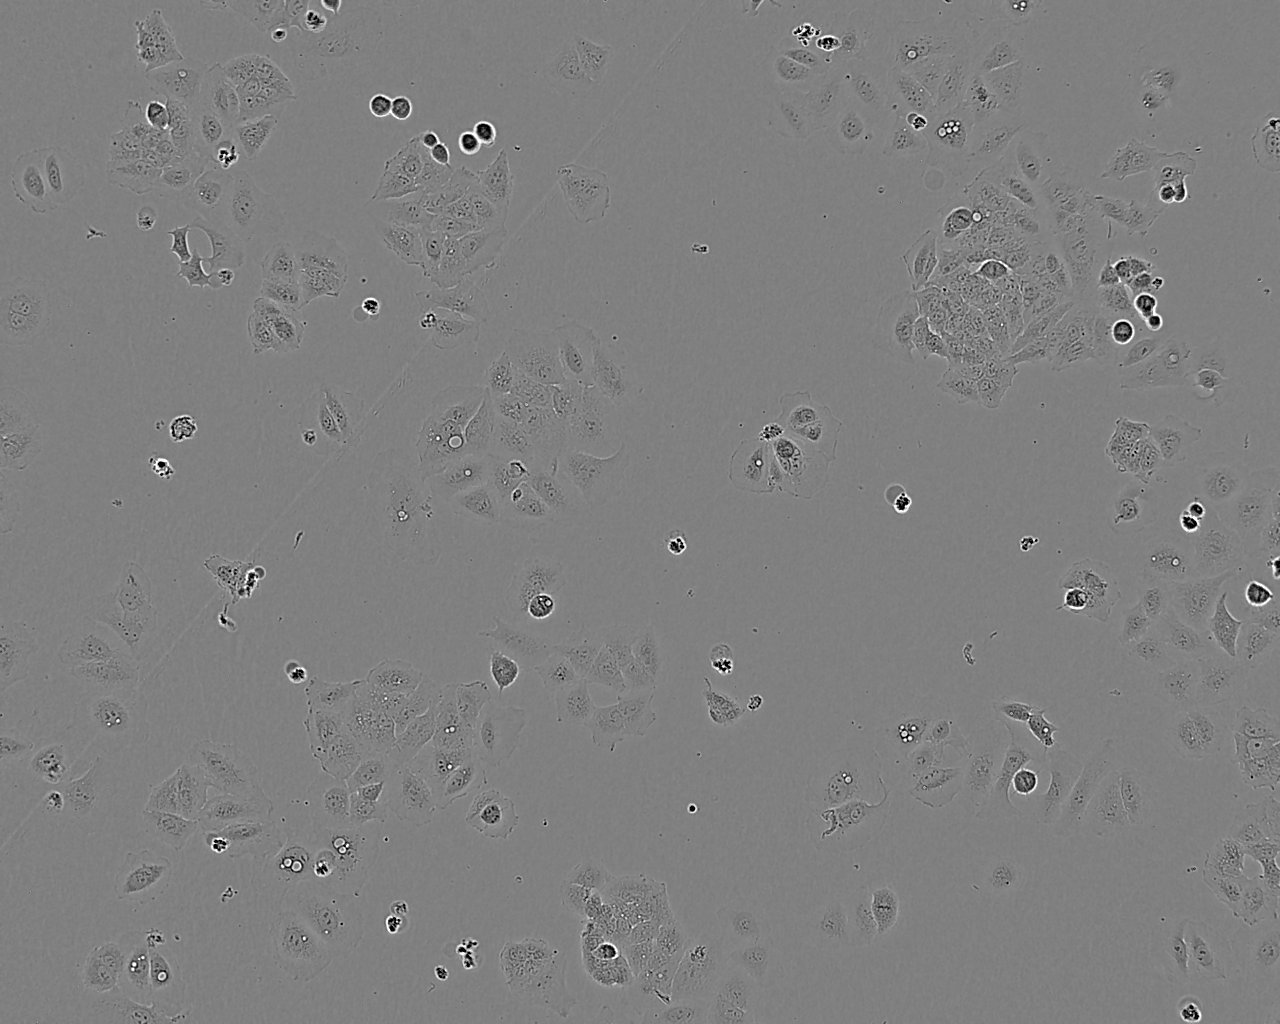 NCI-H2126 epithelioid cells人非小细胞肺癌细胞系,NCI-H2126 epithelioid cells